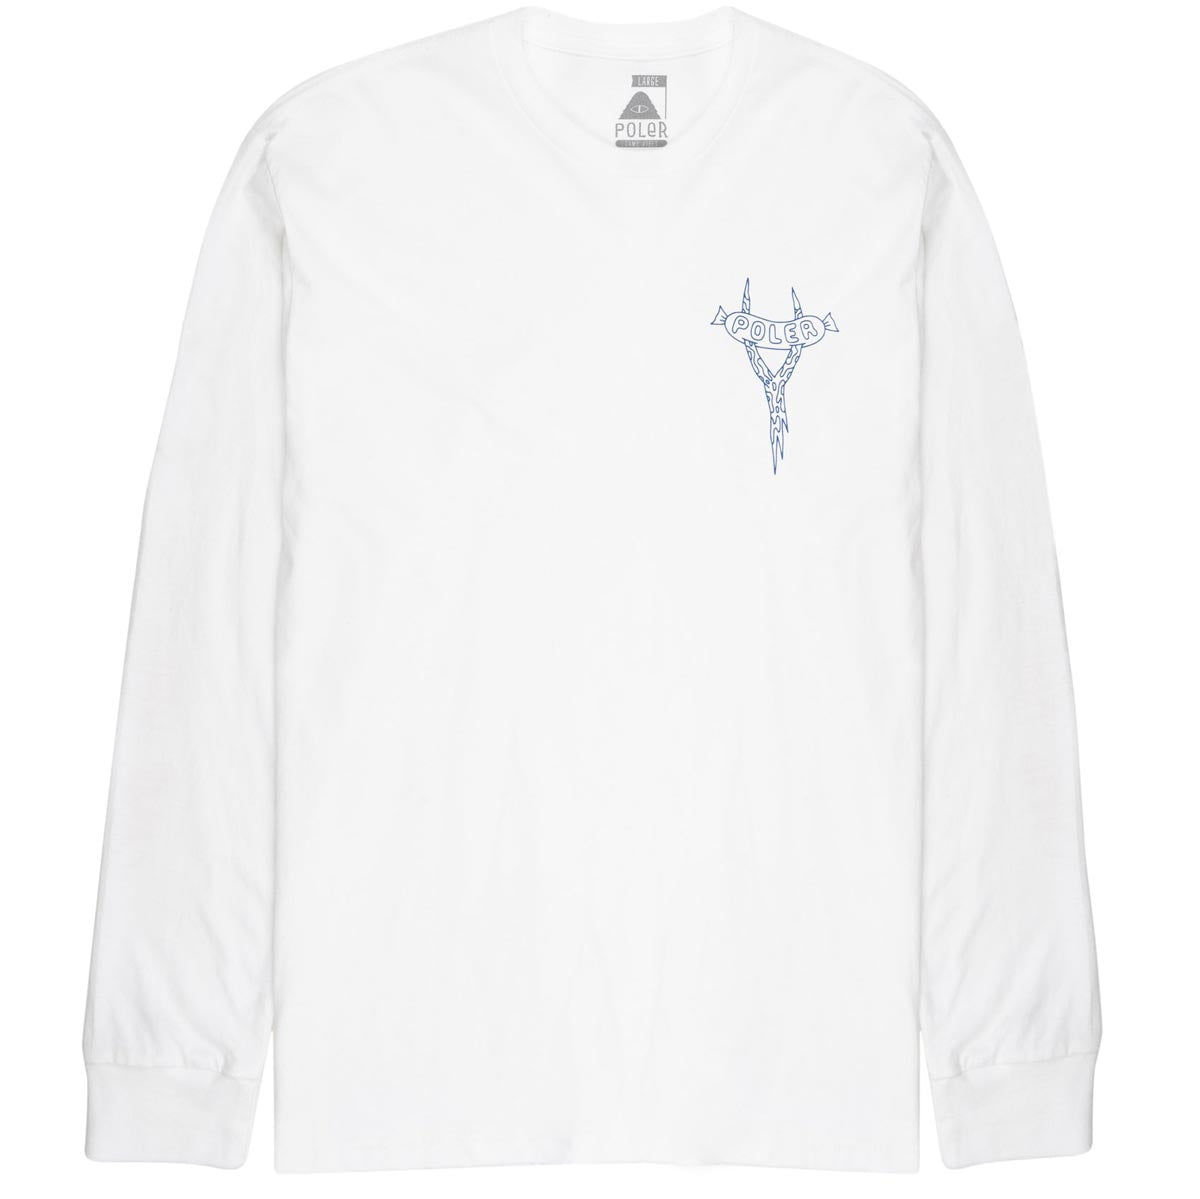 Poler Sasclops Hockey Long Sleeve T-Shirt - White image 2